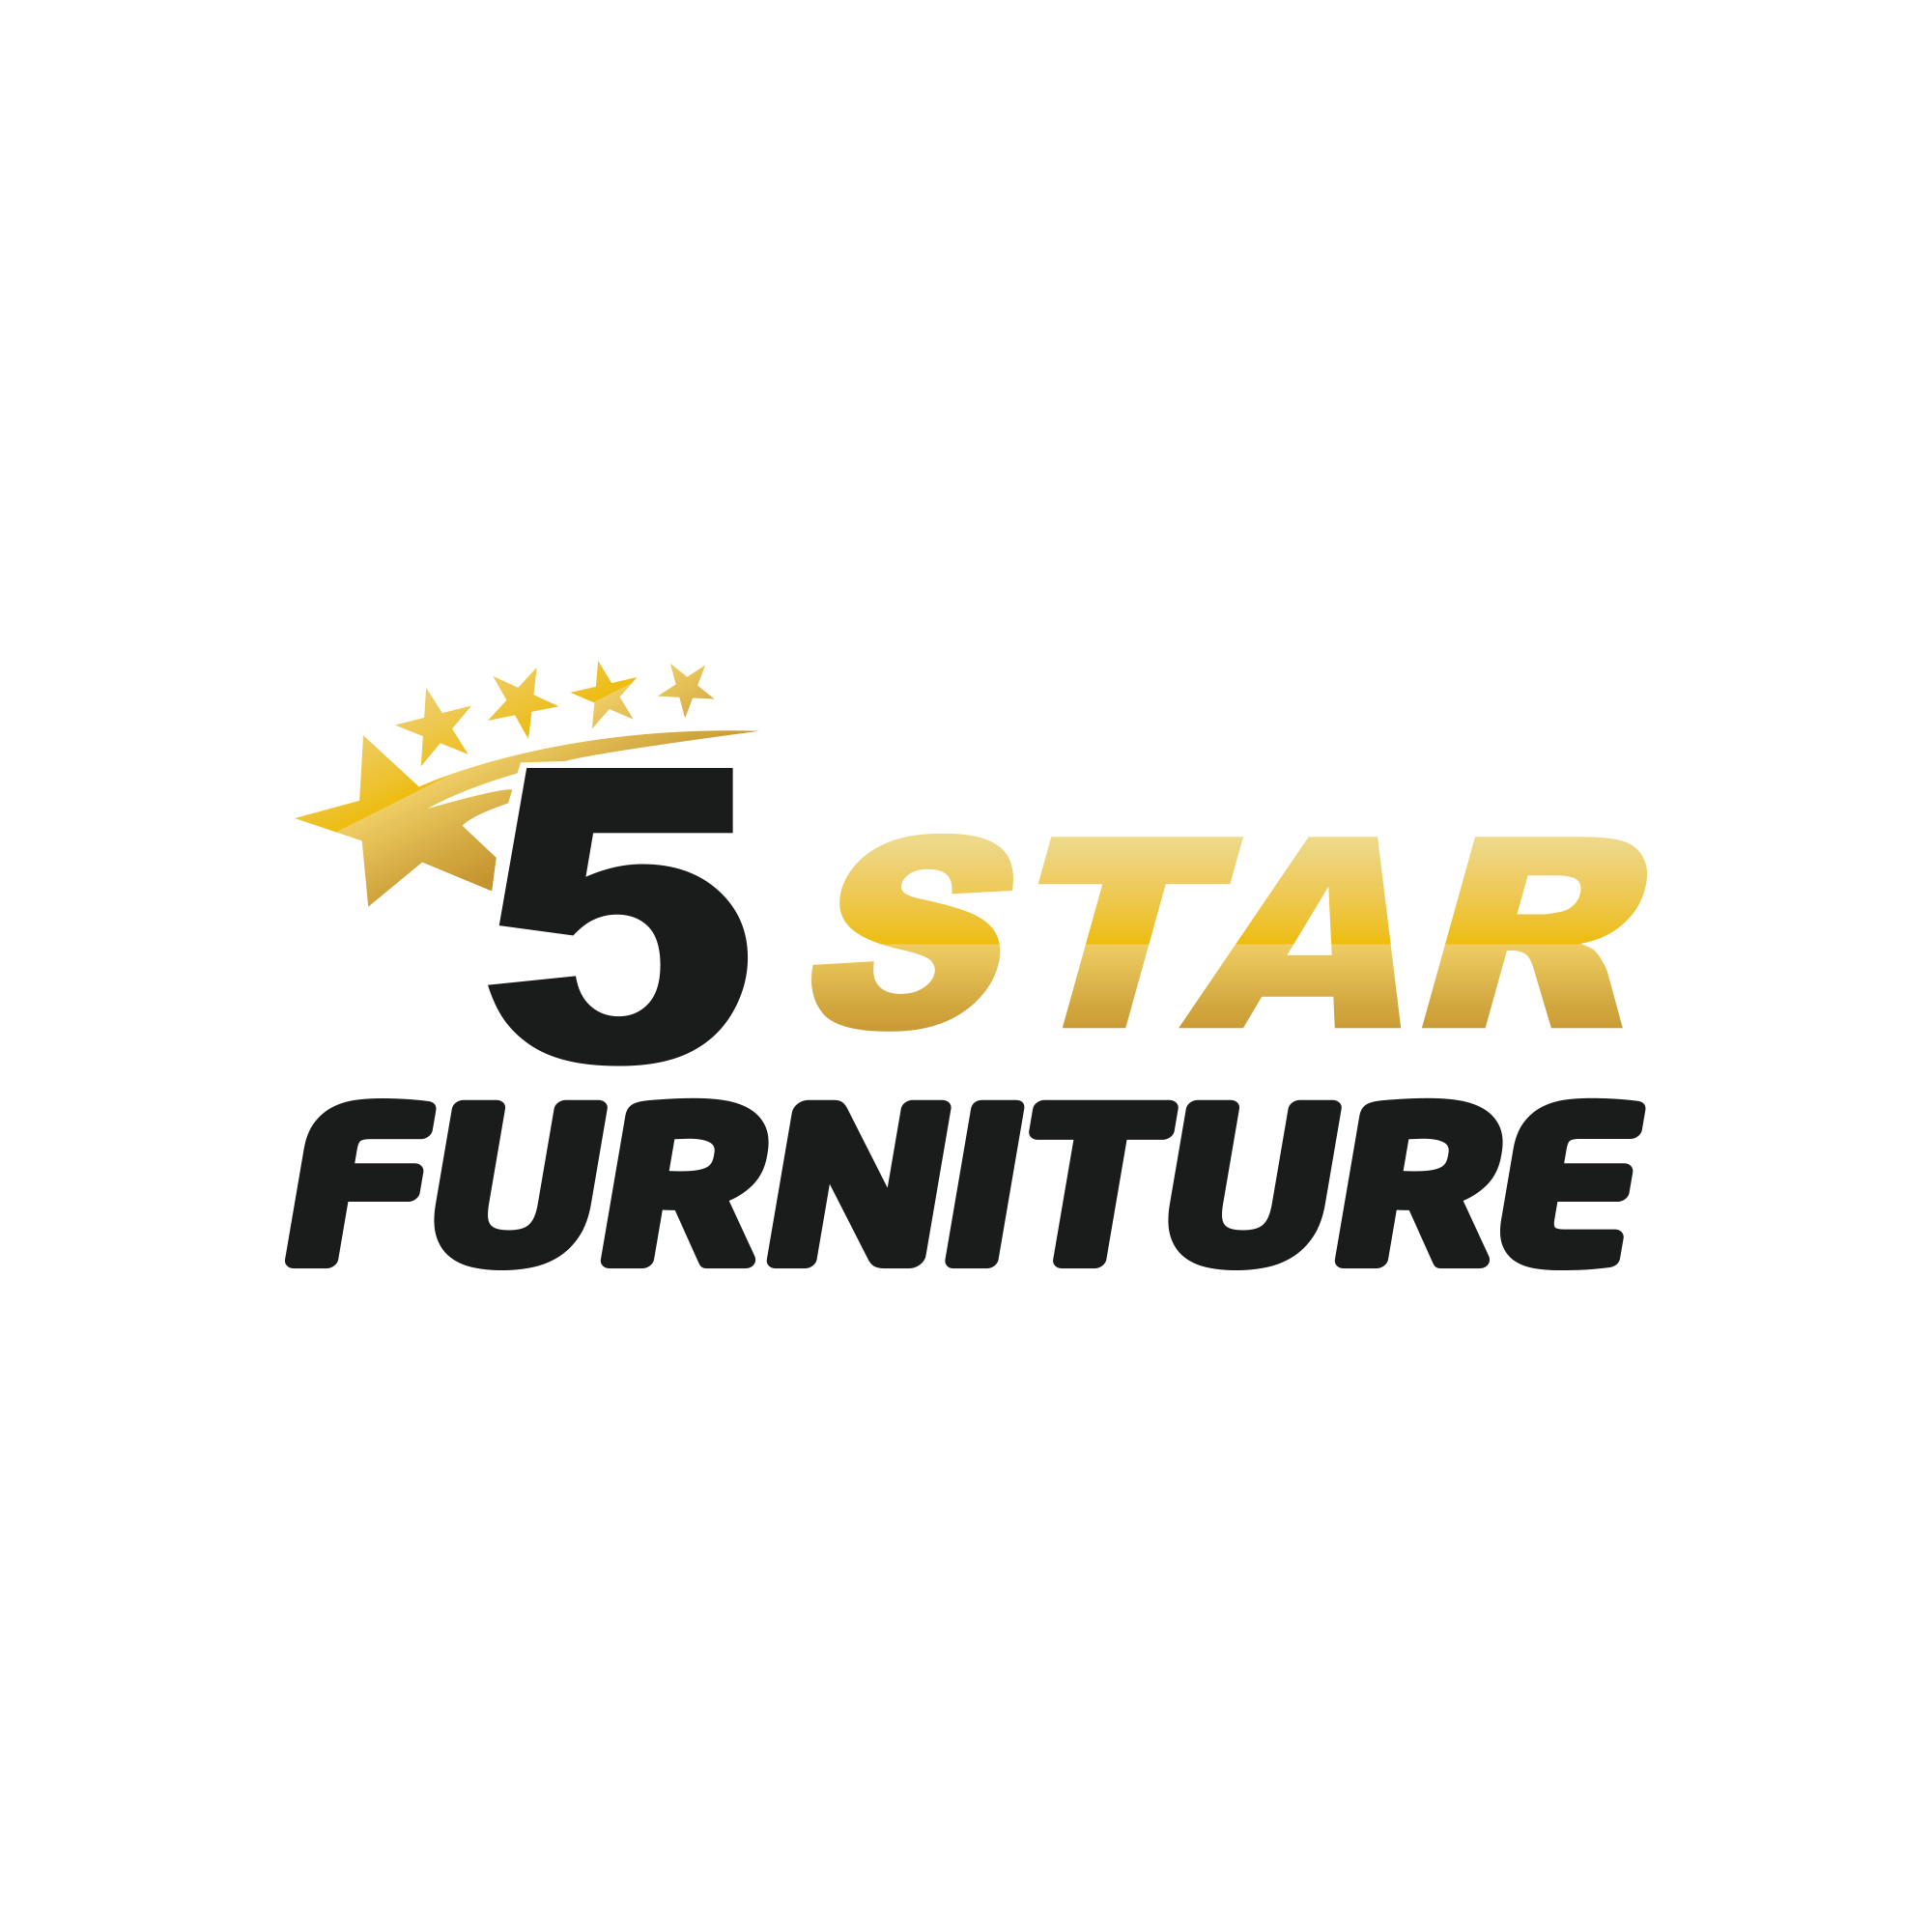 5 star furniture logo